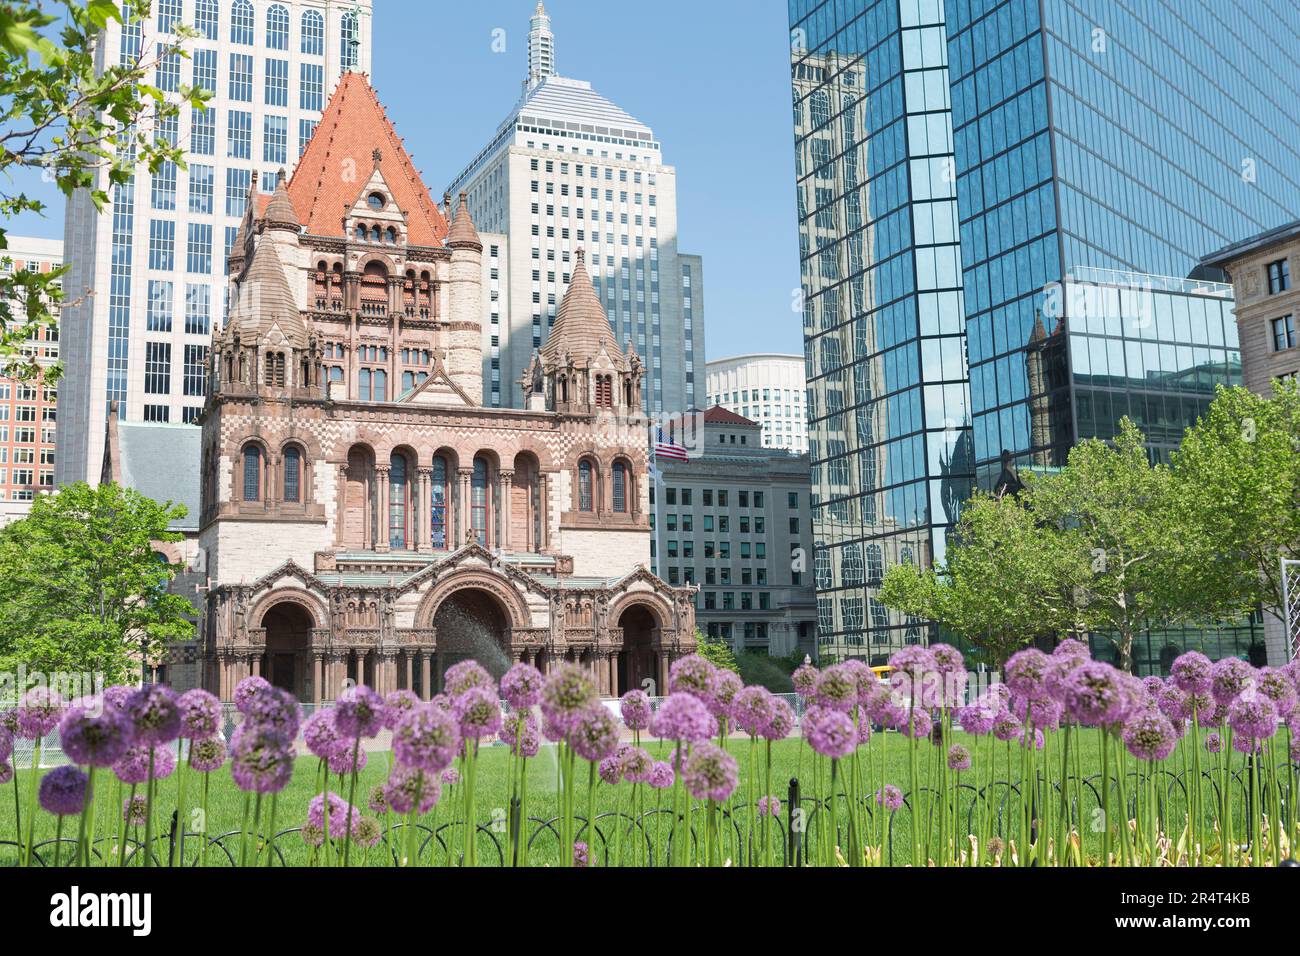 USA, Massachusetts, Boston, Trinity Church and John Hancock Tower with purple flowers. Stock Photo